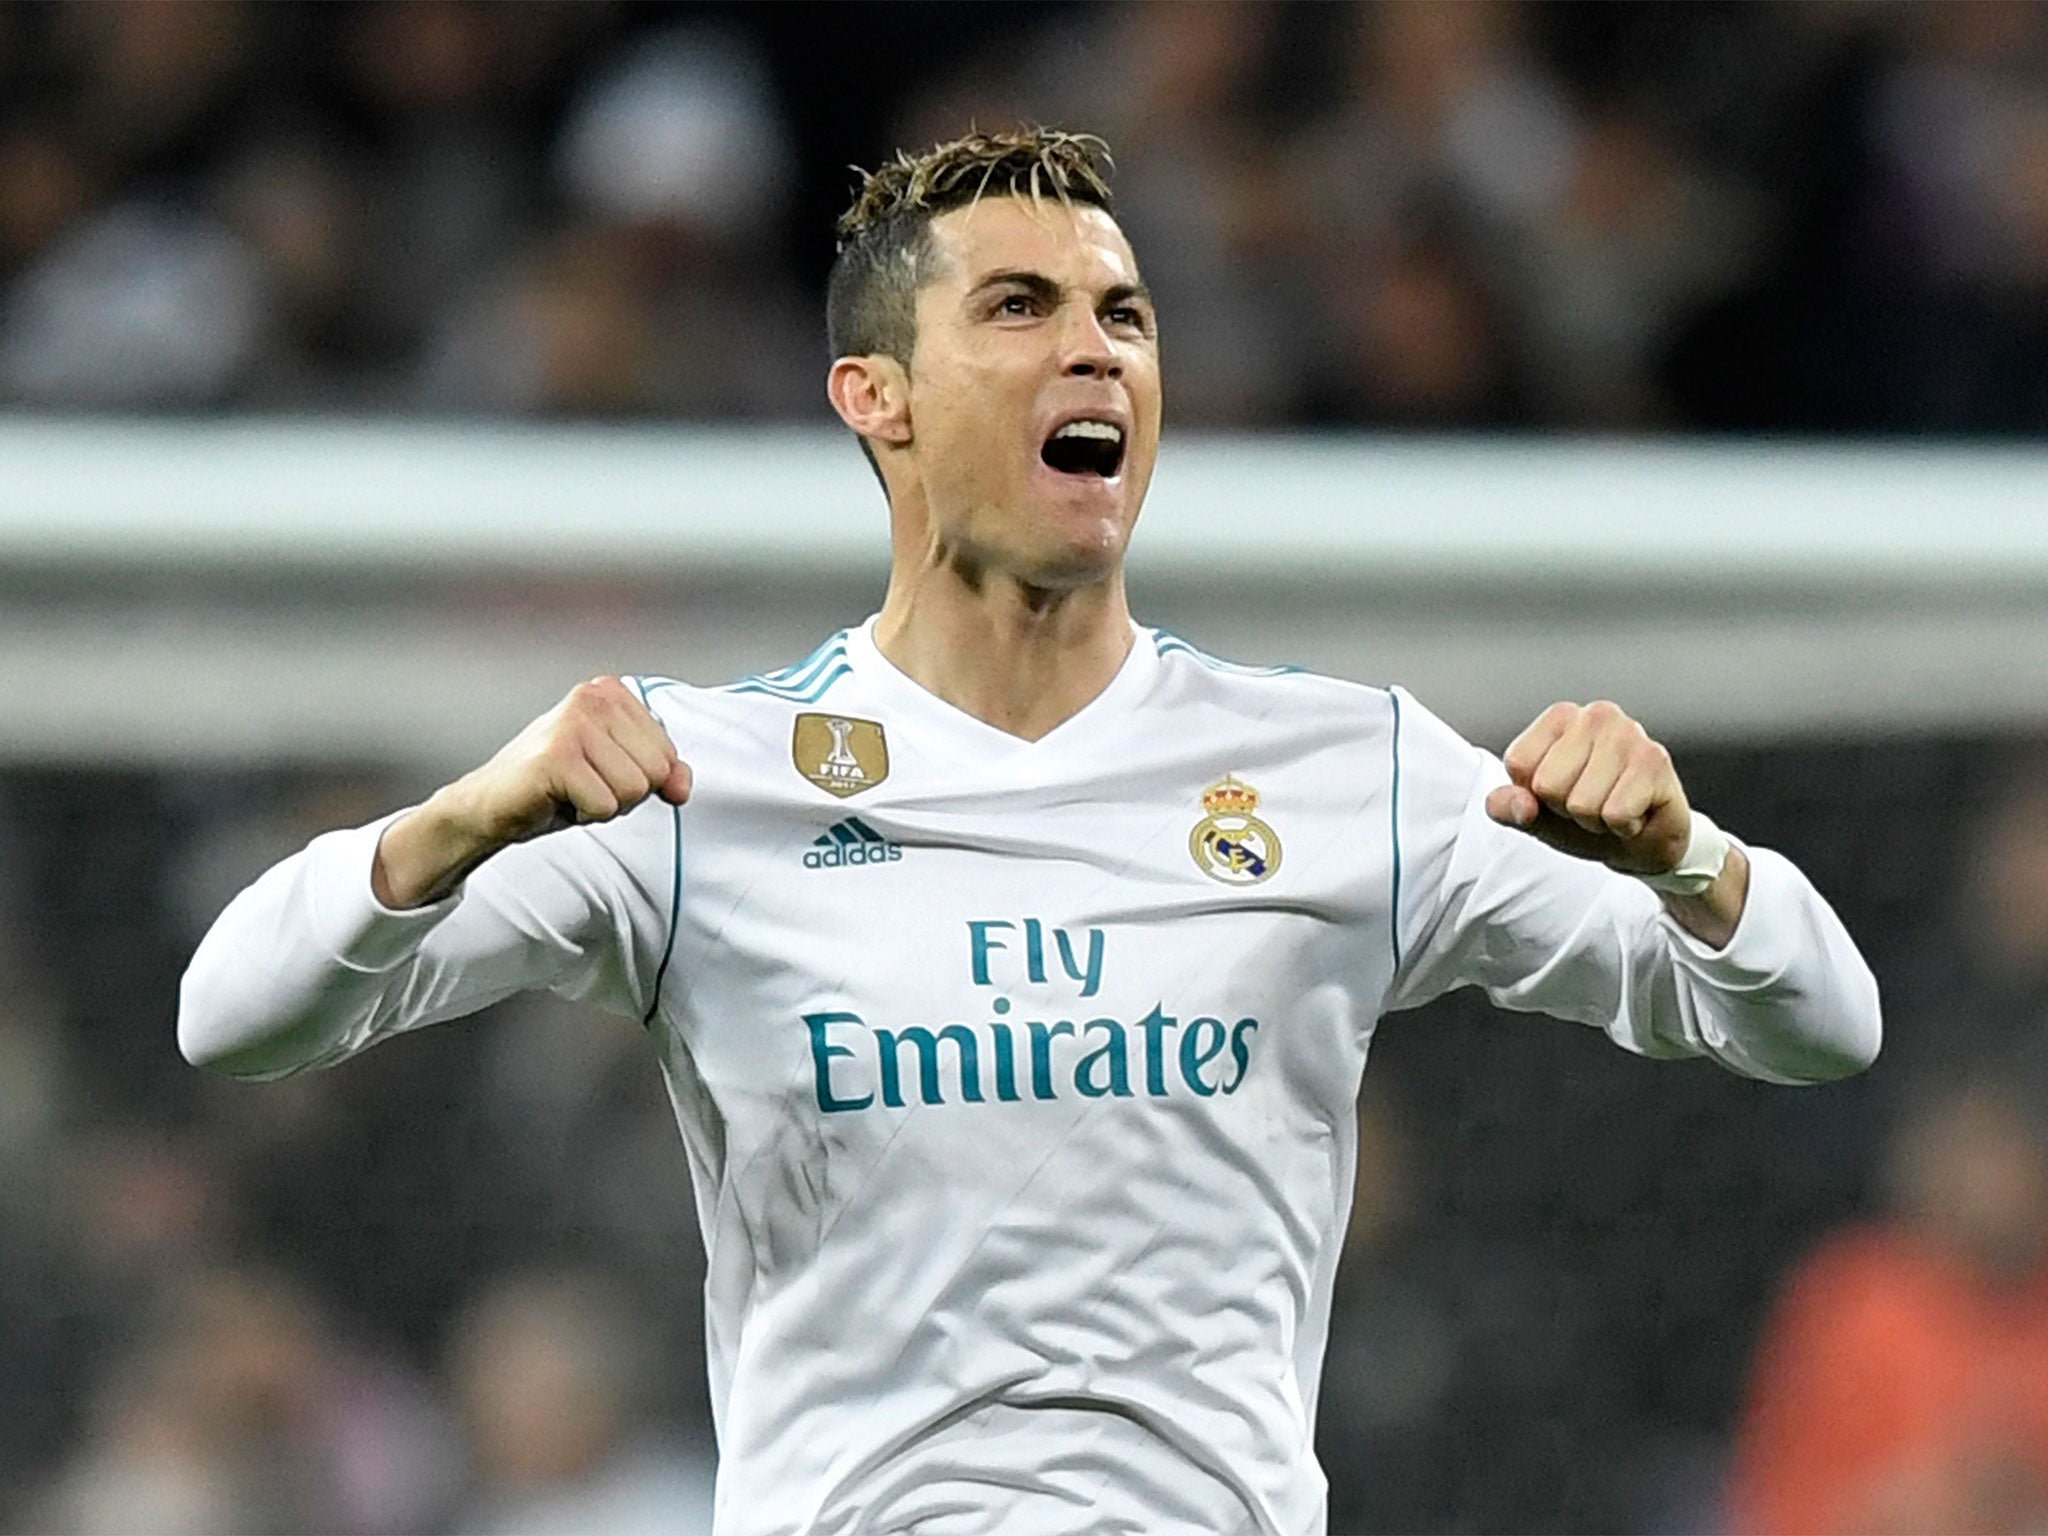 Cristiano Ronaldo scored twice as Real Madrid beat PSG 3-1